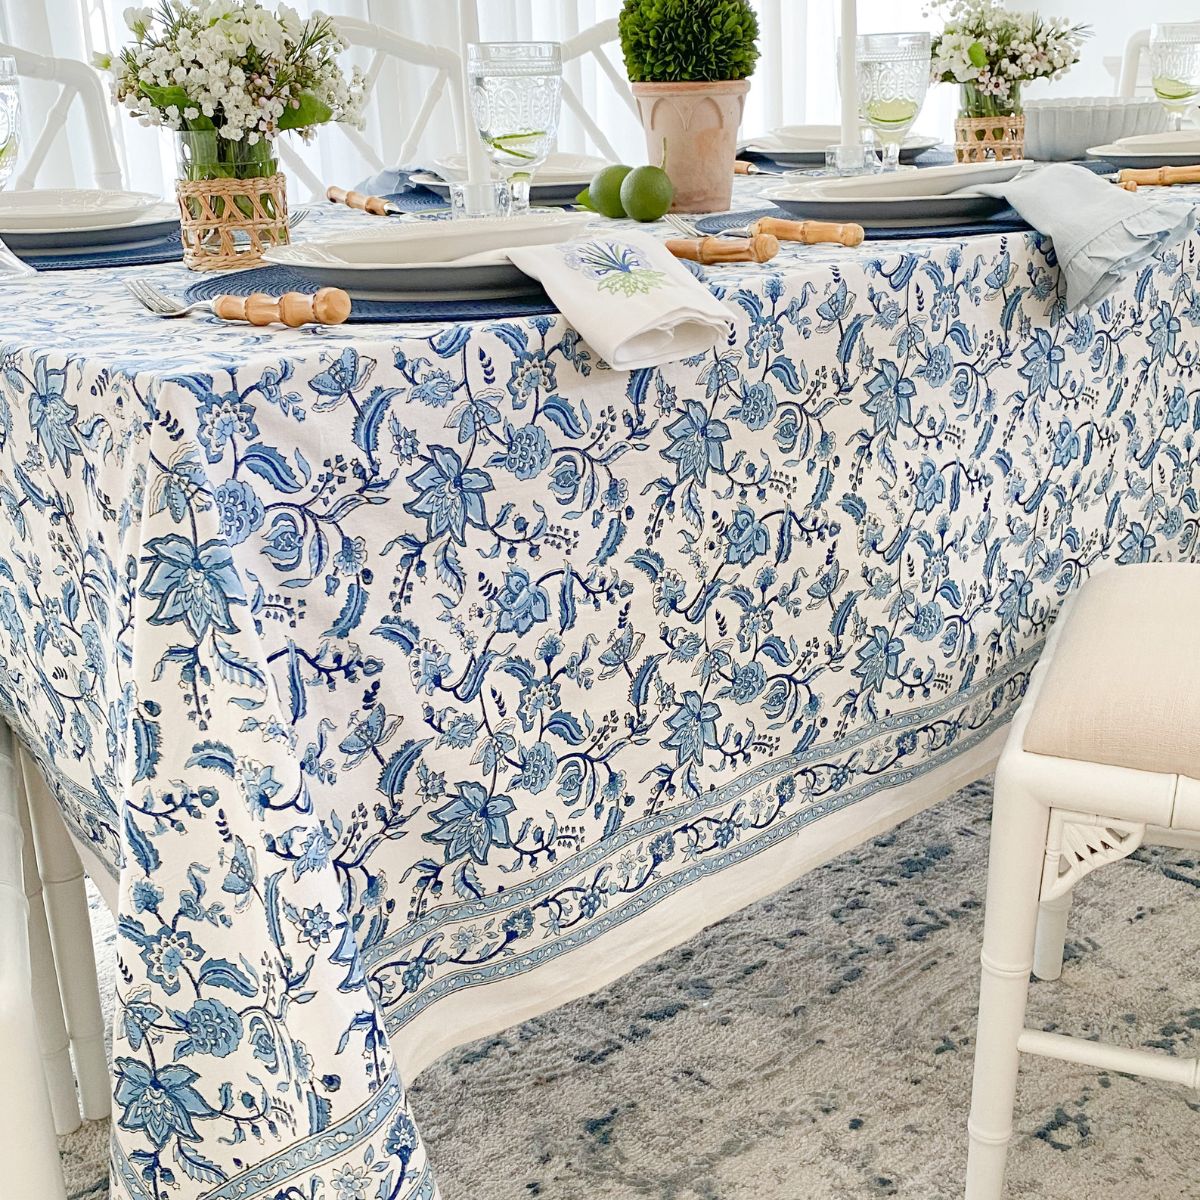 Chintz Blue tablecloth ©